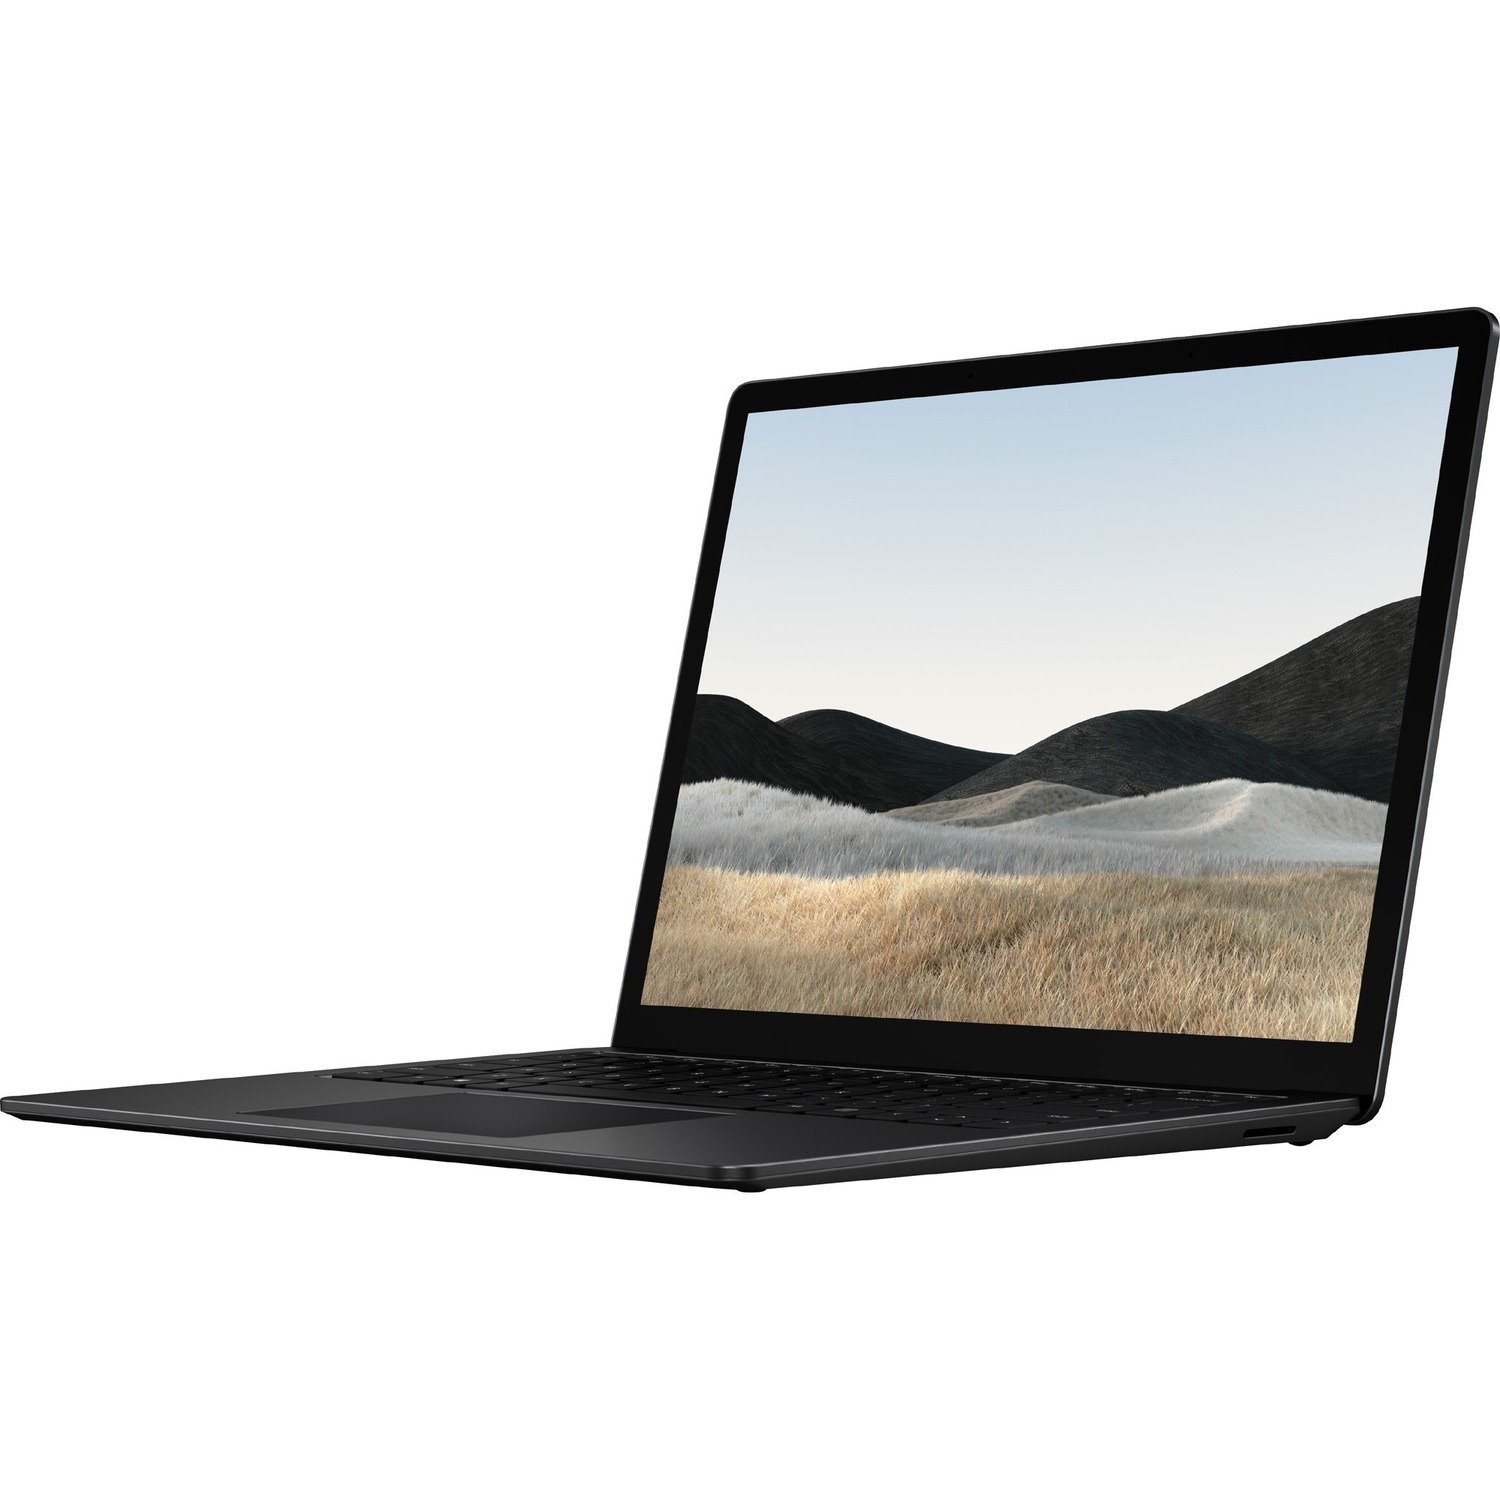 Microsoft Surface Laptop 4 34.3 cm (13.5") Touchscreen Notebook - 2256 x 1504 - Intel Core i5 - 8 GB Total RAM - 256 GB SSD - Matte Black